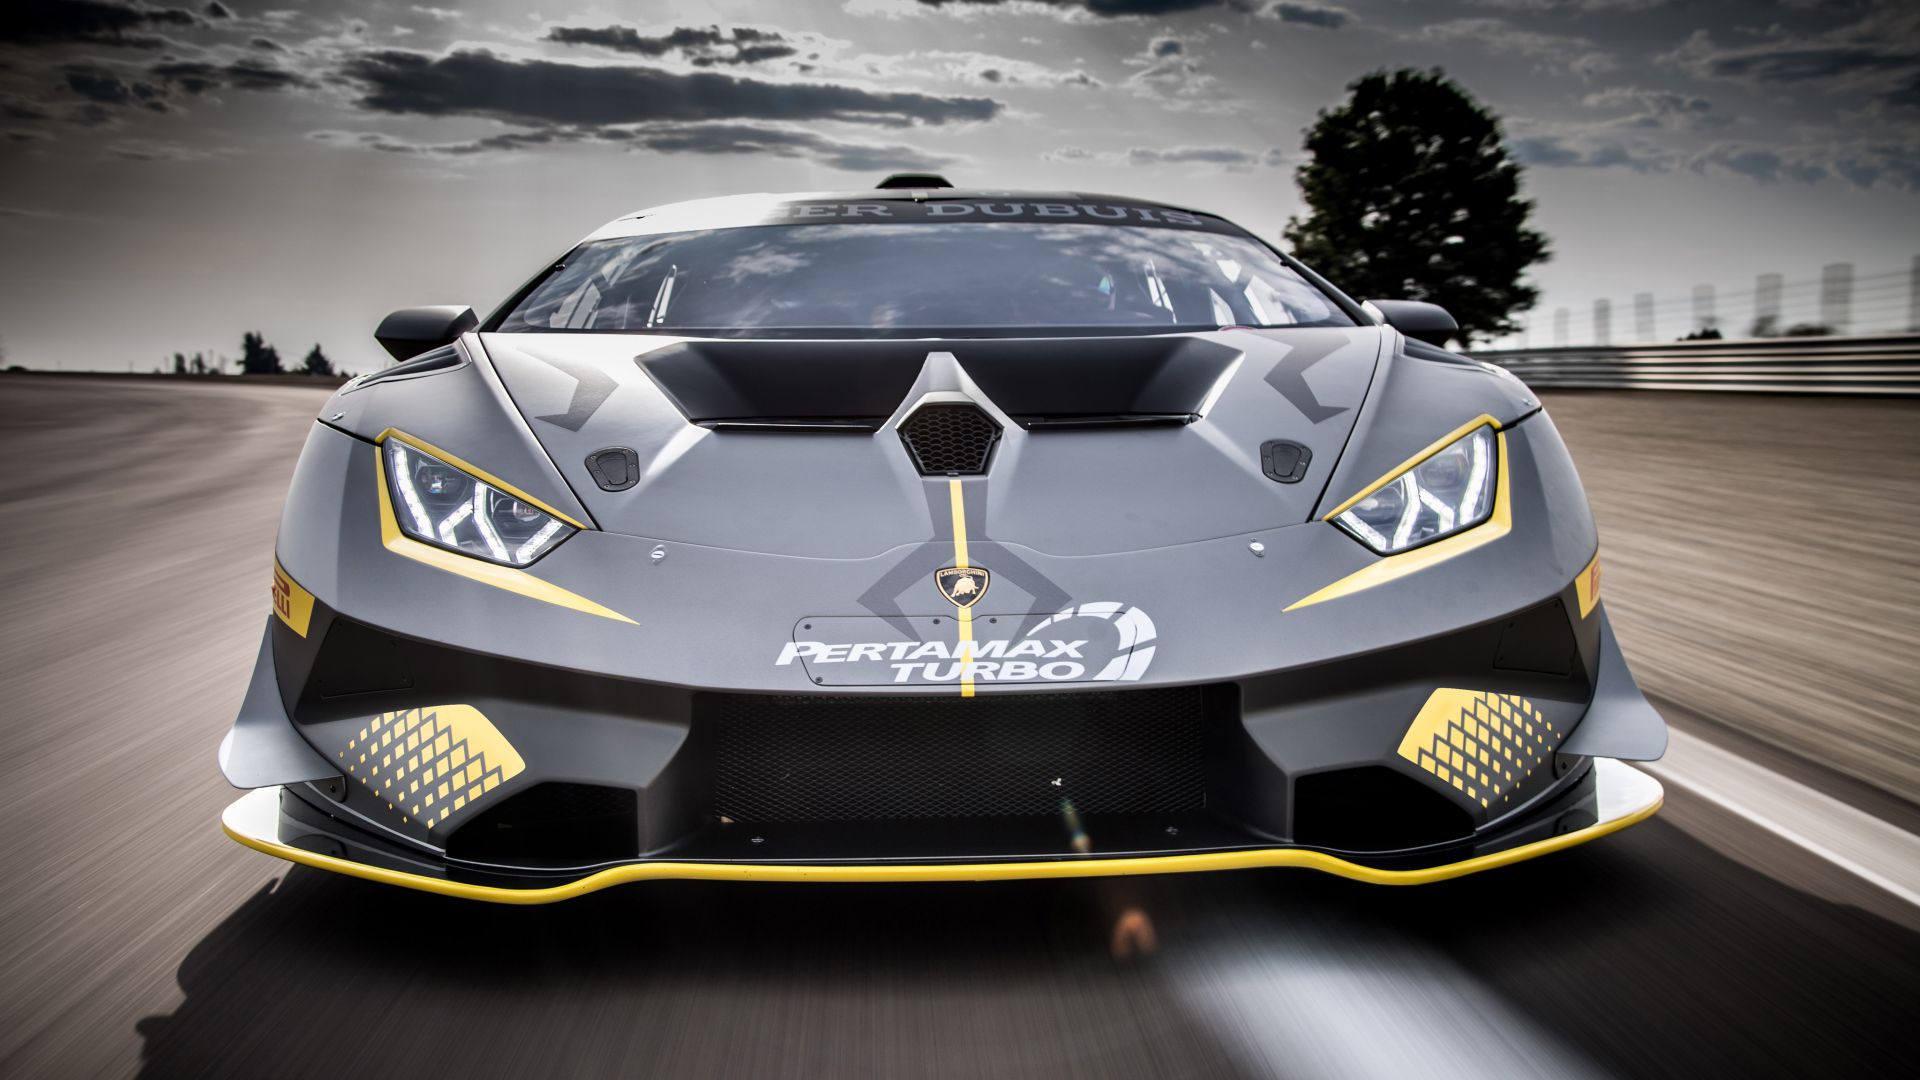 Desktop Wallpaper Lamborghini Huracan Super Trofeo Evo, Car, 4k, Hd Image,  Picture, Background, 5499c8